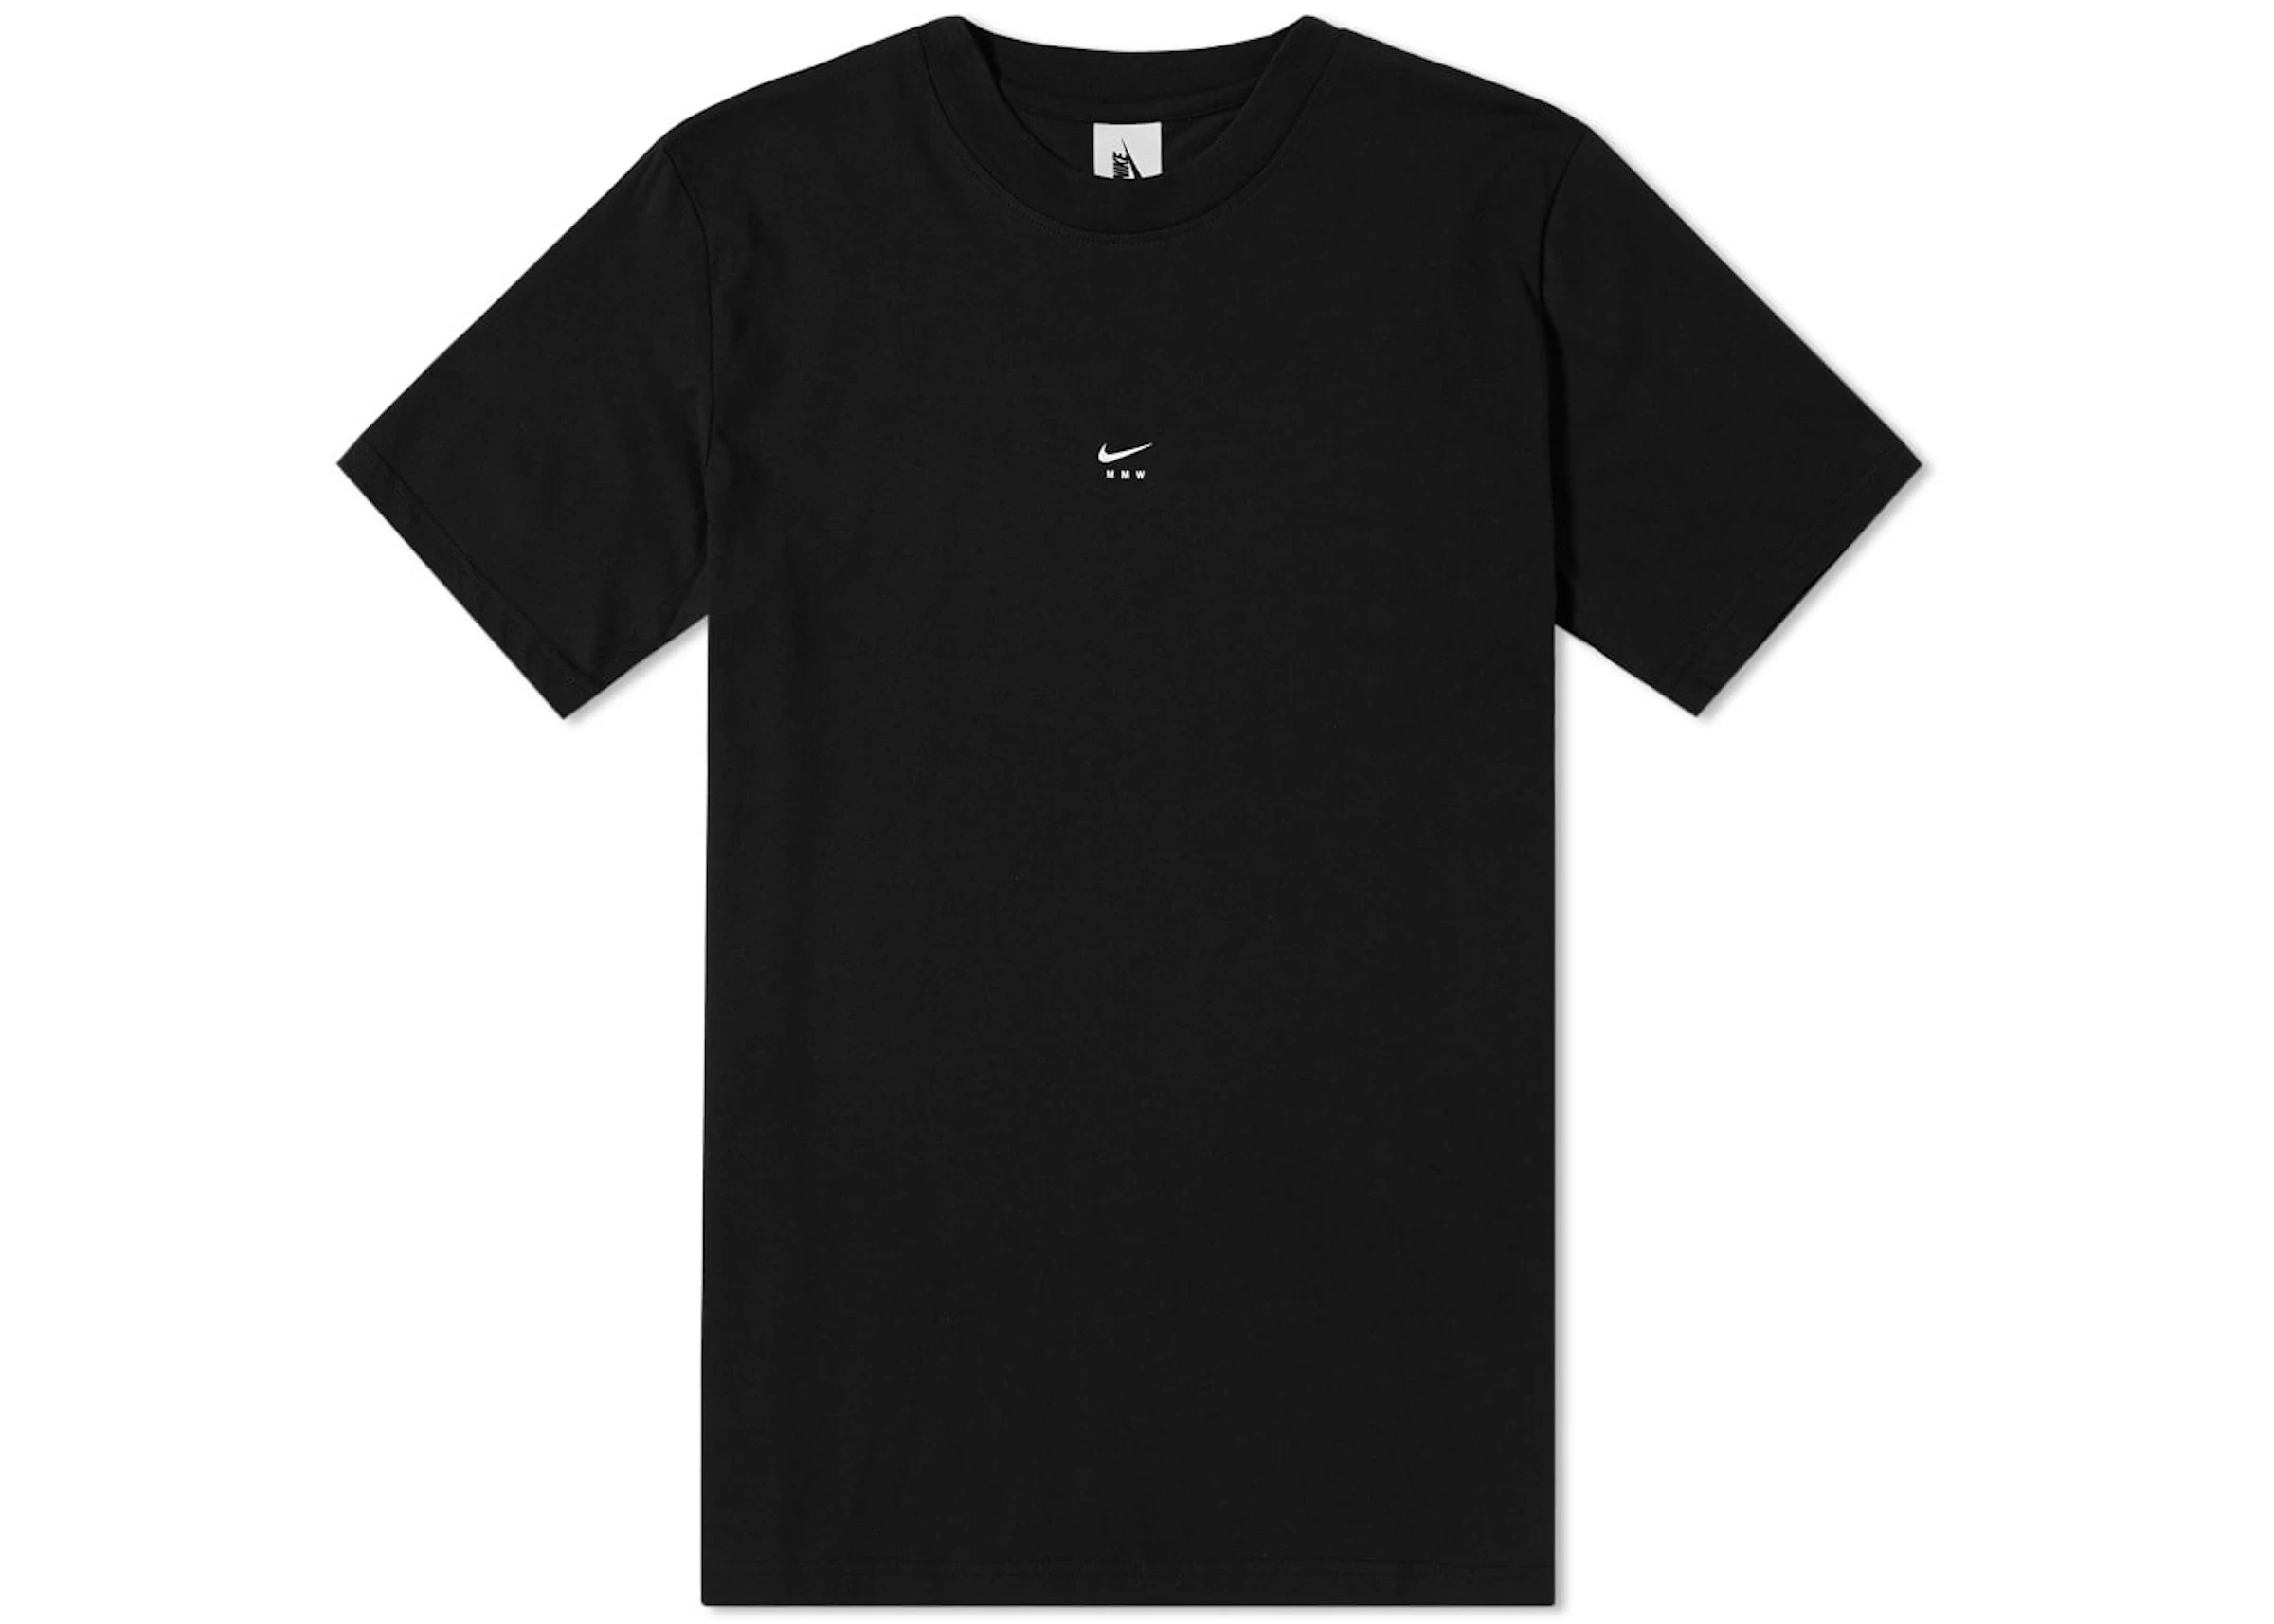 Nikelab x MMW Graphic T-Shirt Black SS18 -